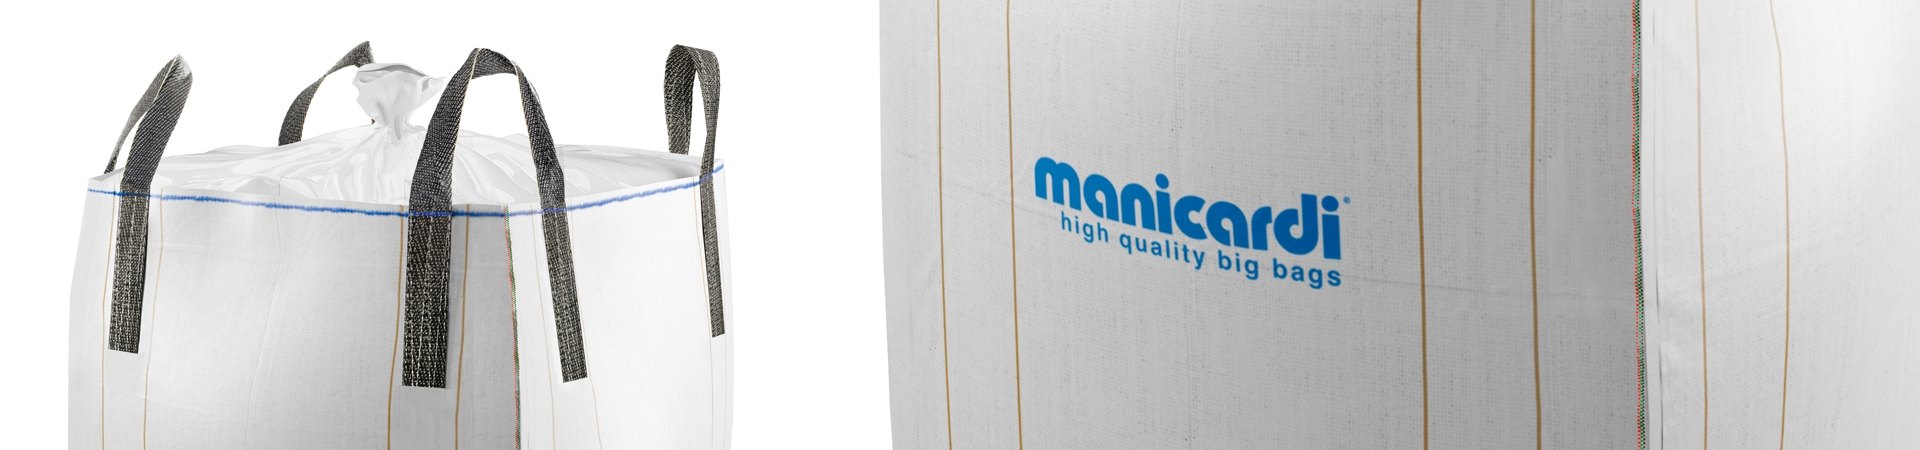 manicardi - hight quality big bags اطلب معلومات عن السعر